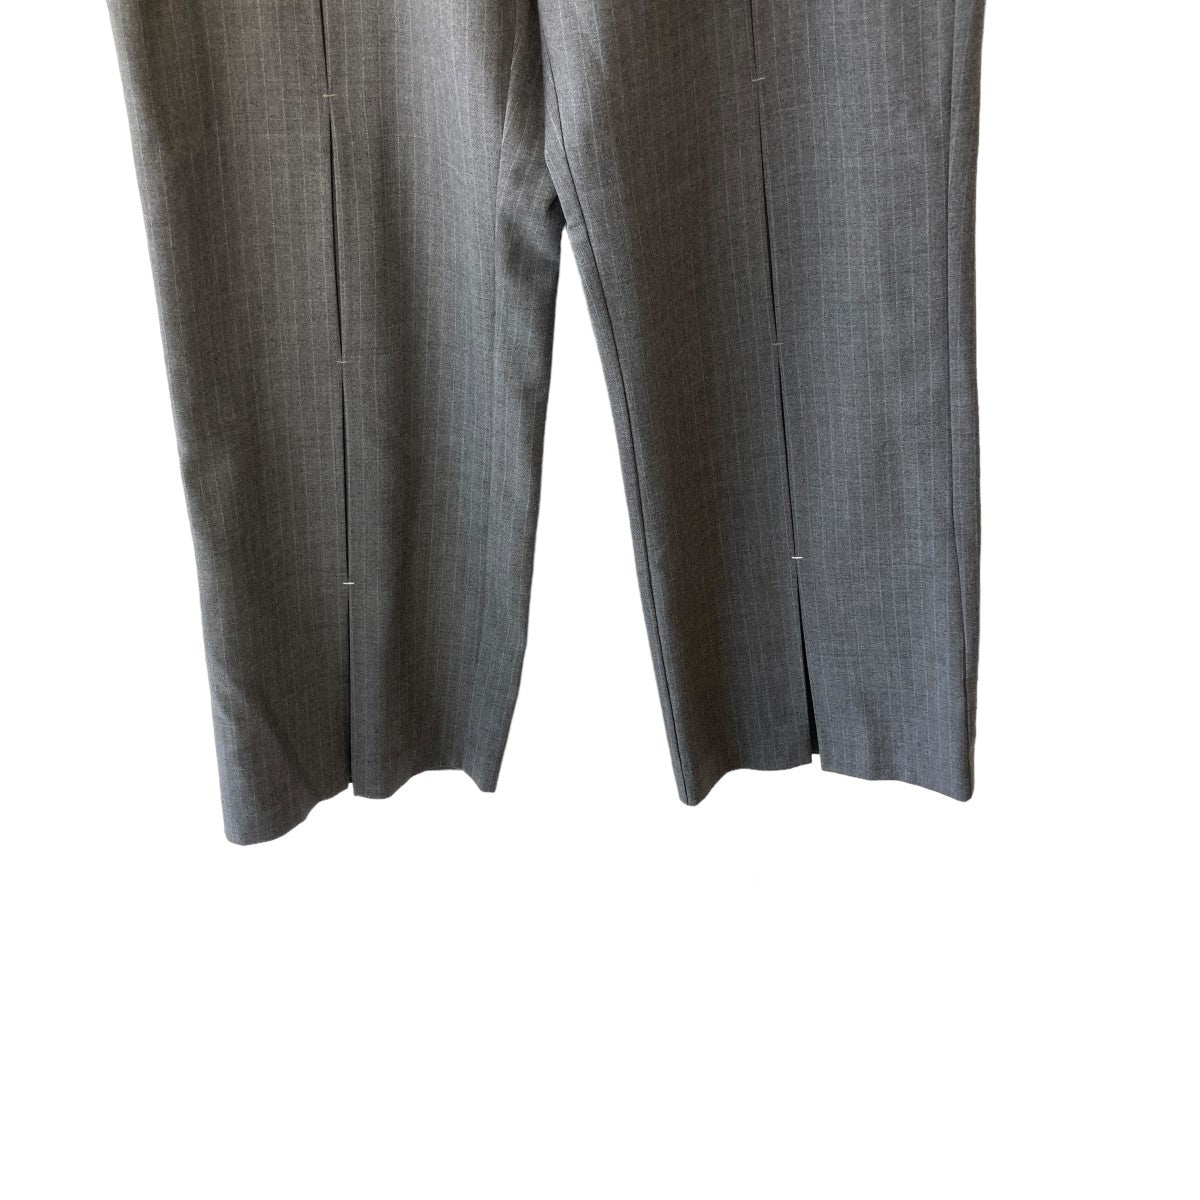 soduk(スドーク) Soduk Inverted Pleats Trousers グレー サイズ 11 